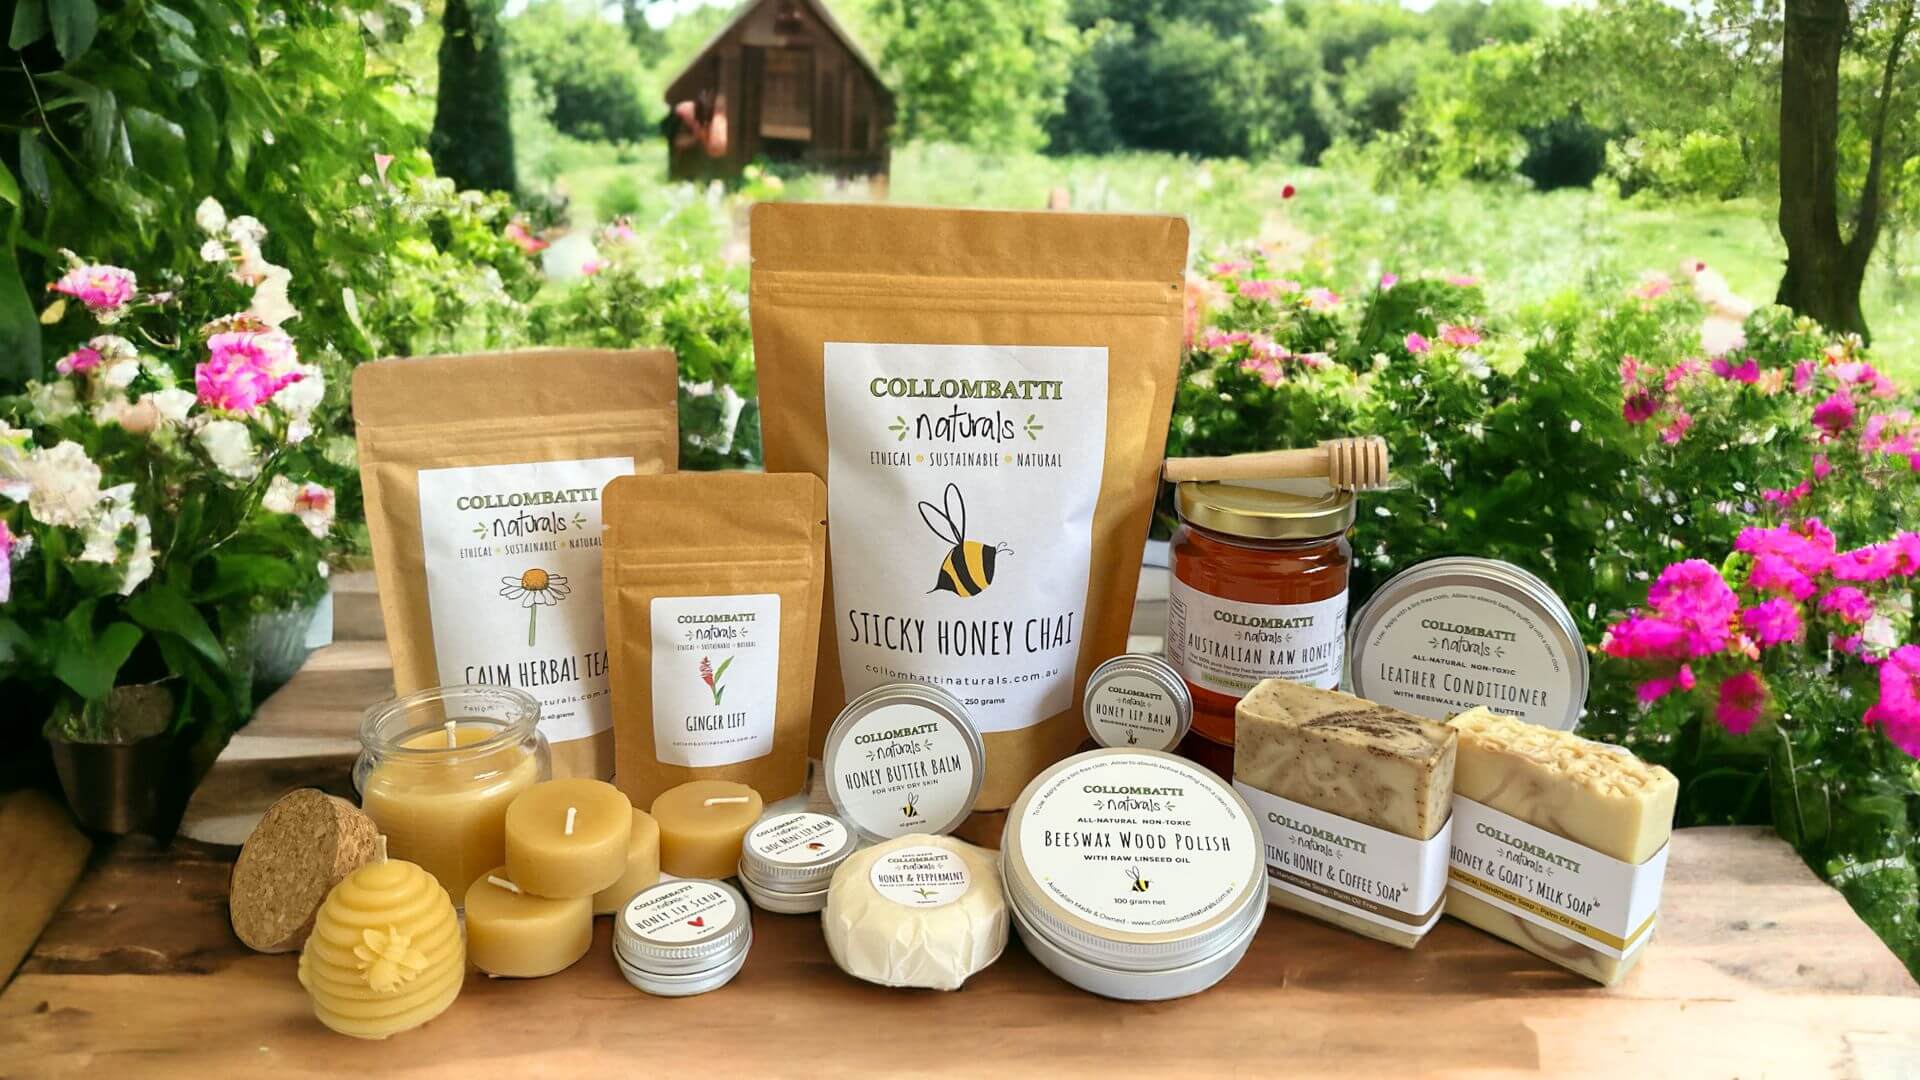 Collombatti Naturals Beeswax, honey and tea product handmade in regional Australia